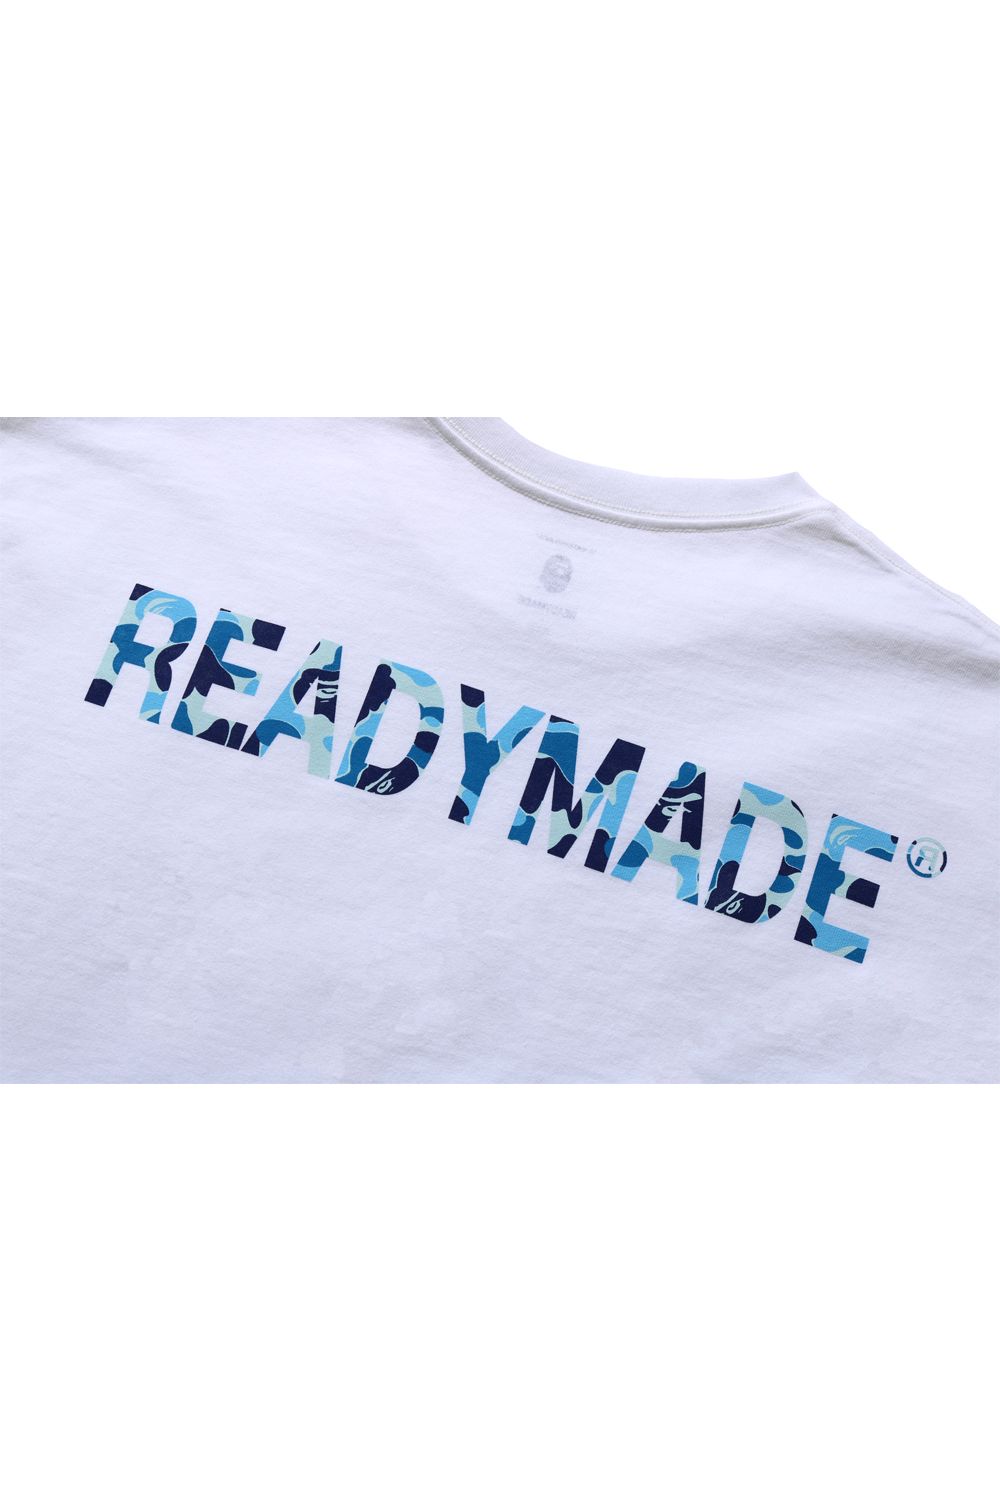 READYMADE - READYMADE × A BATHING APE ® 3 PACK TEE / レディメイド 